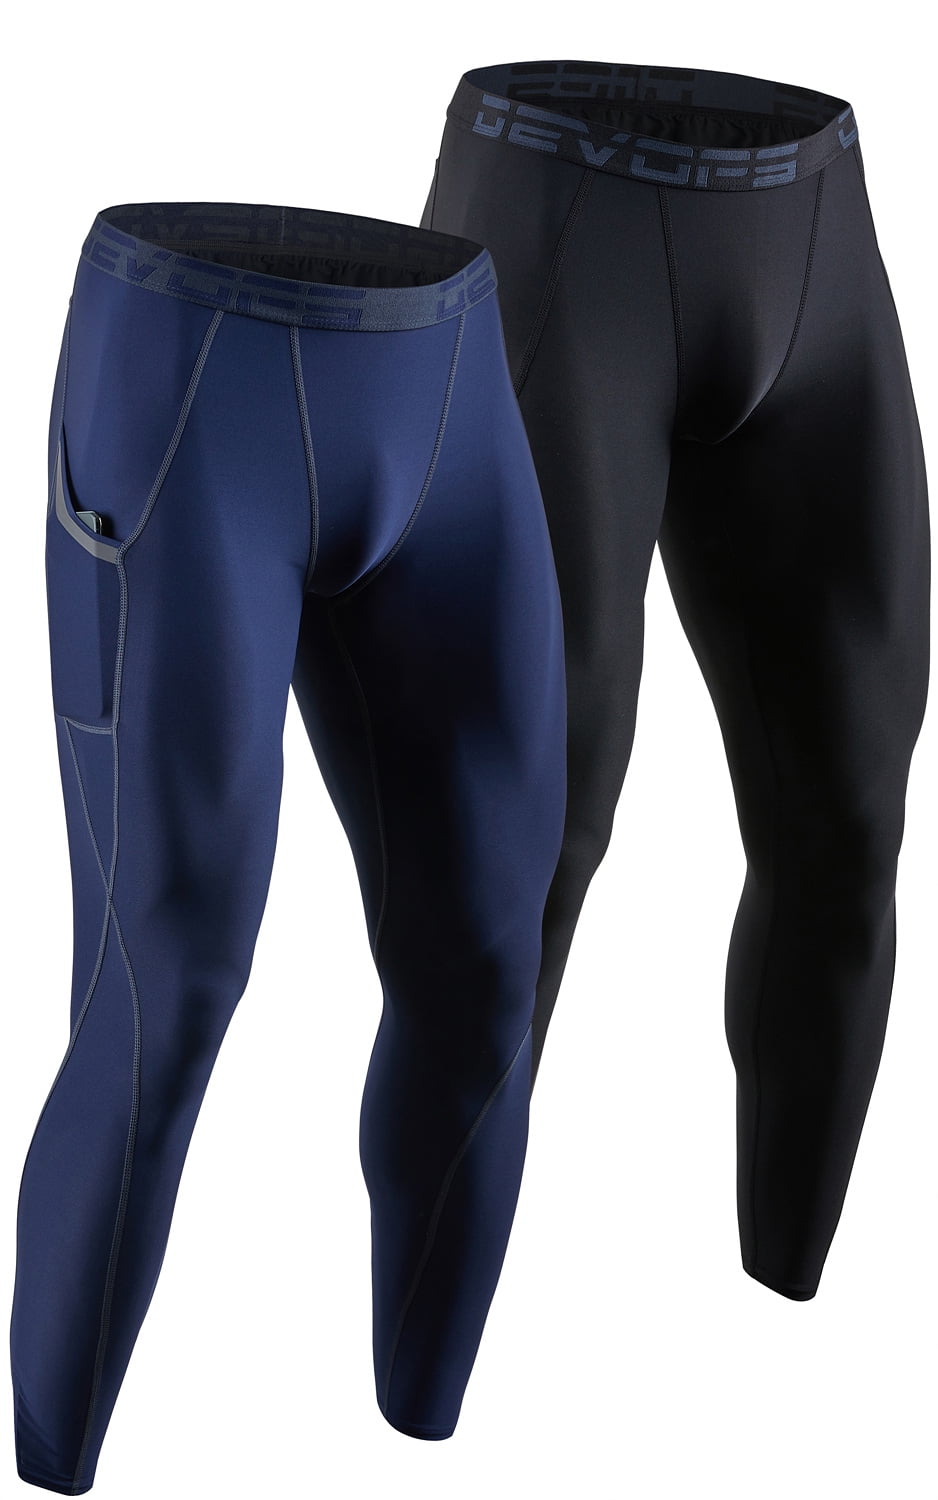 DEVOPS 2 Pack Men's Compression Pants Athletic Leggings (X-Large